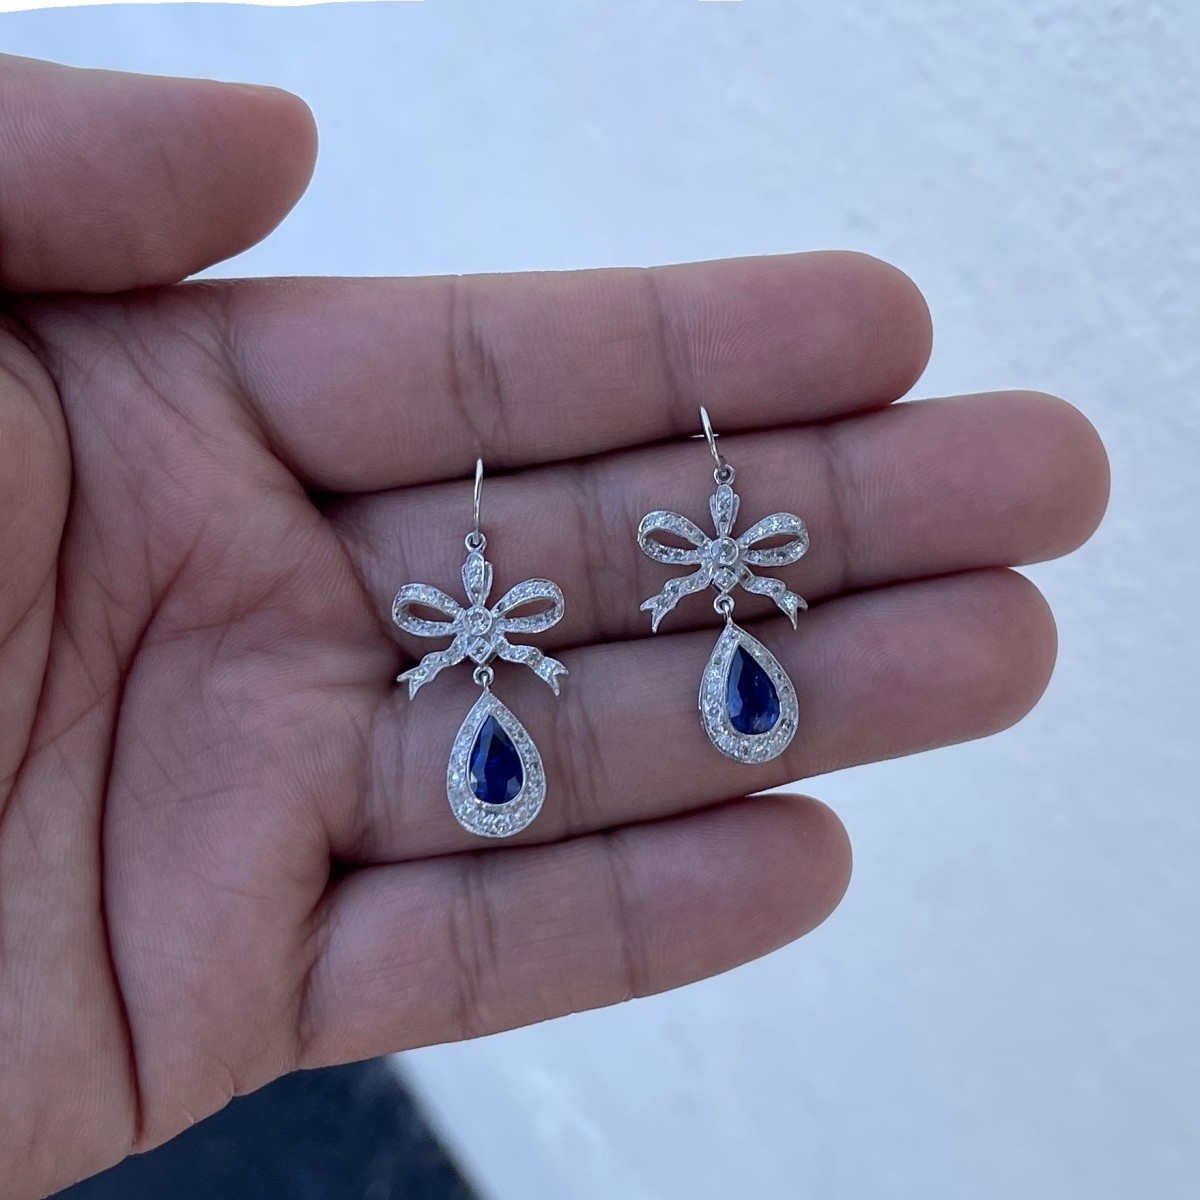 Sapphire, Diamond and 18K Earrings